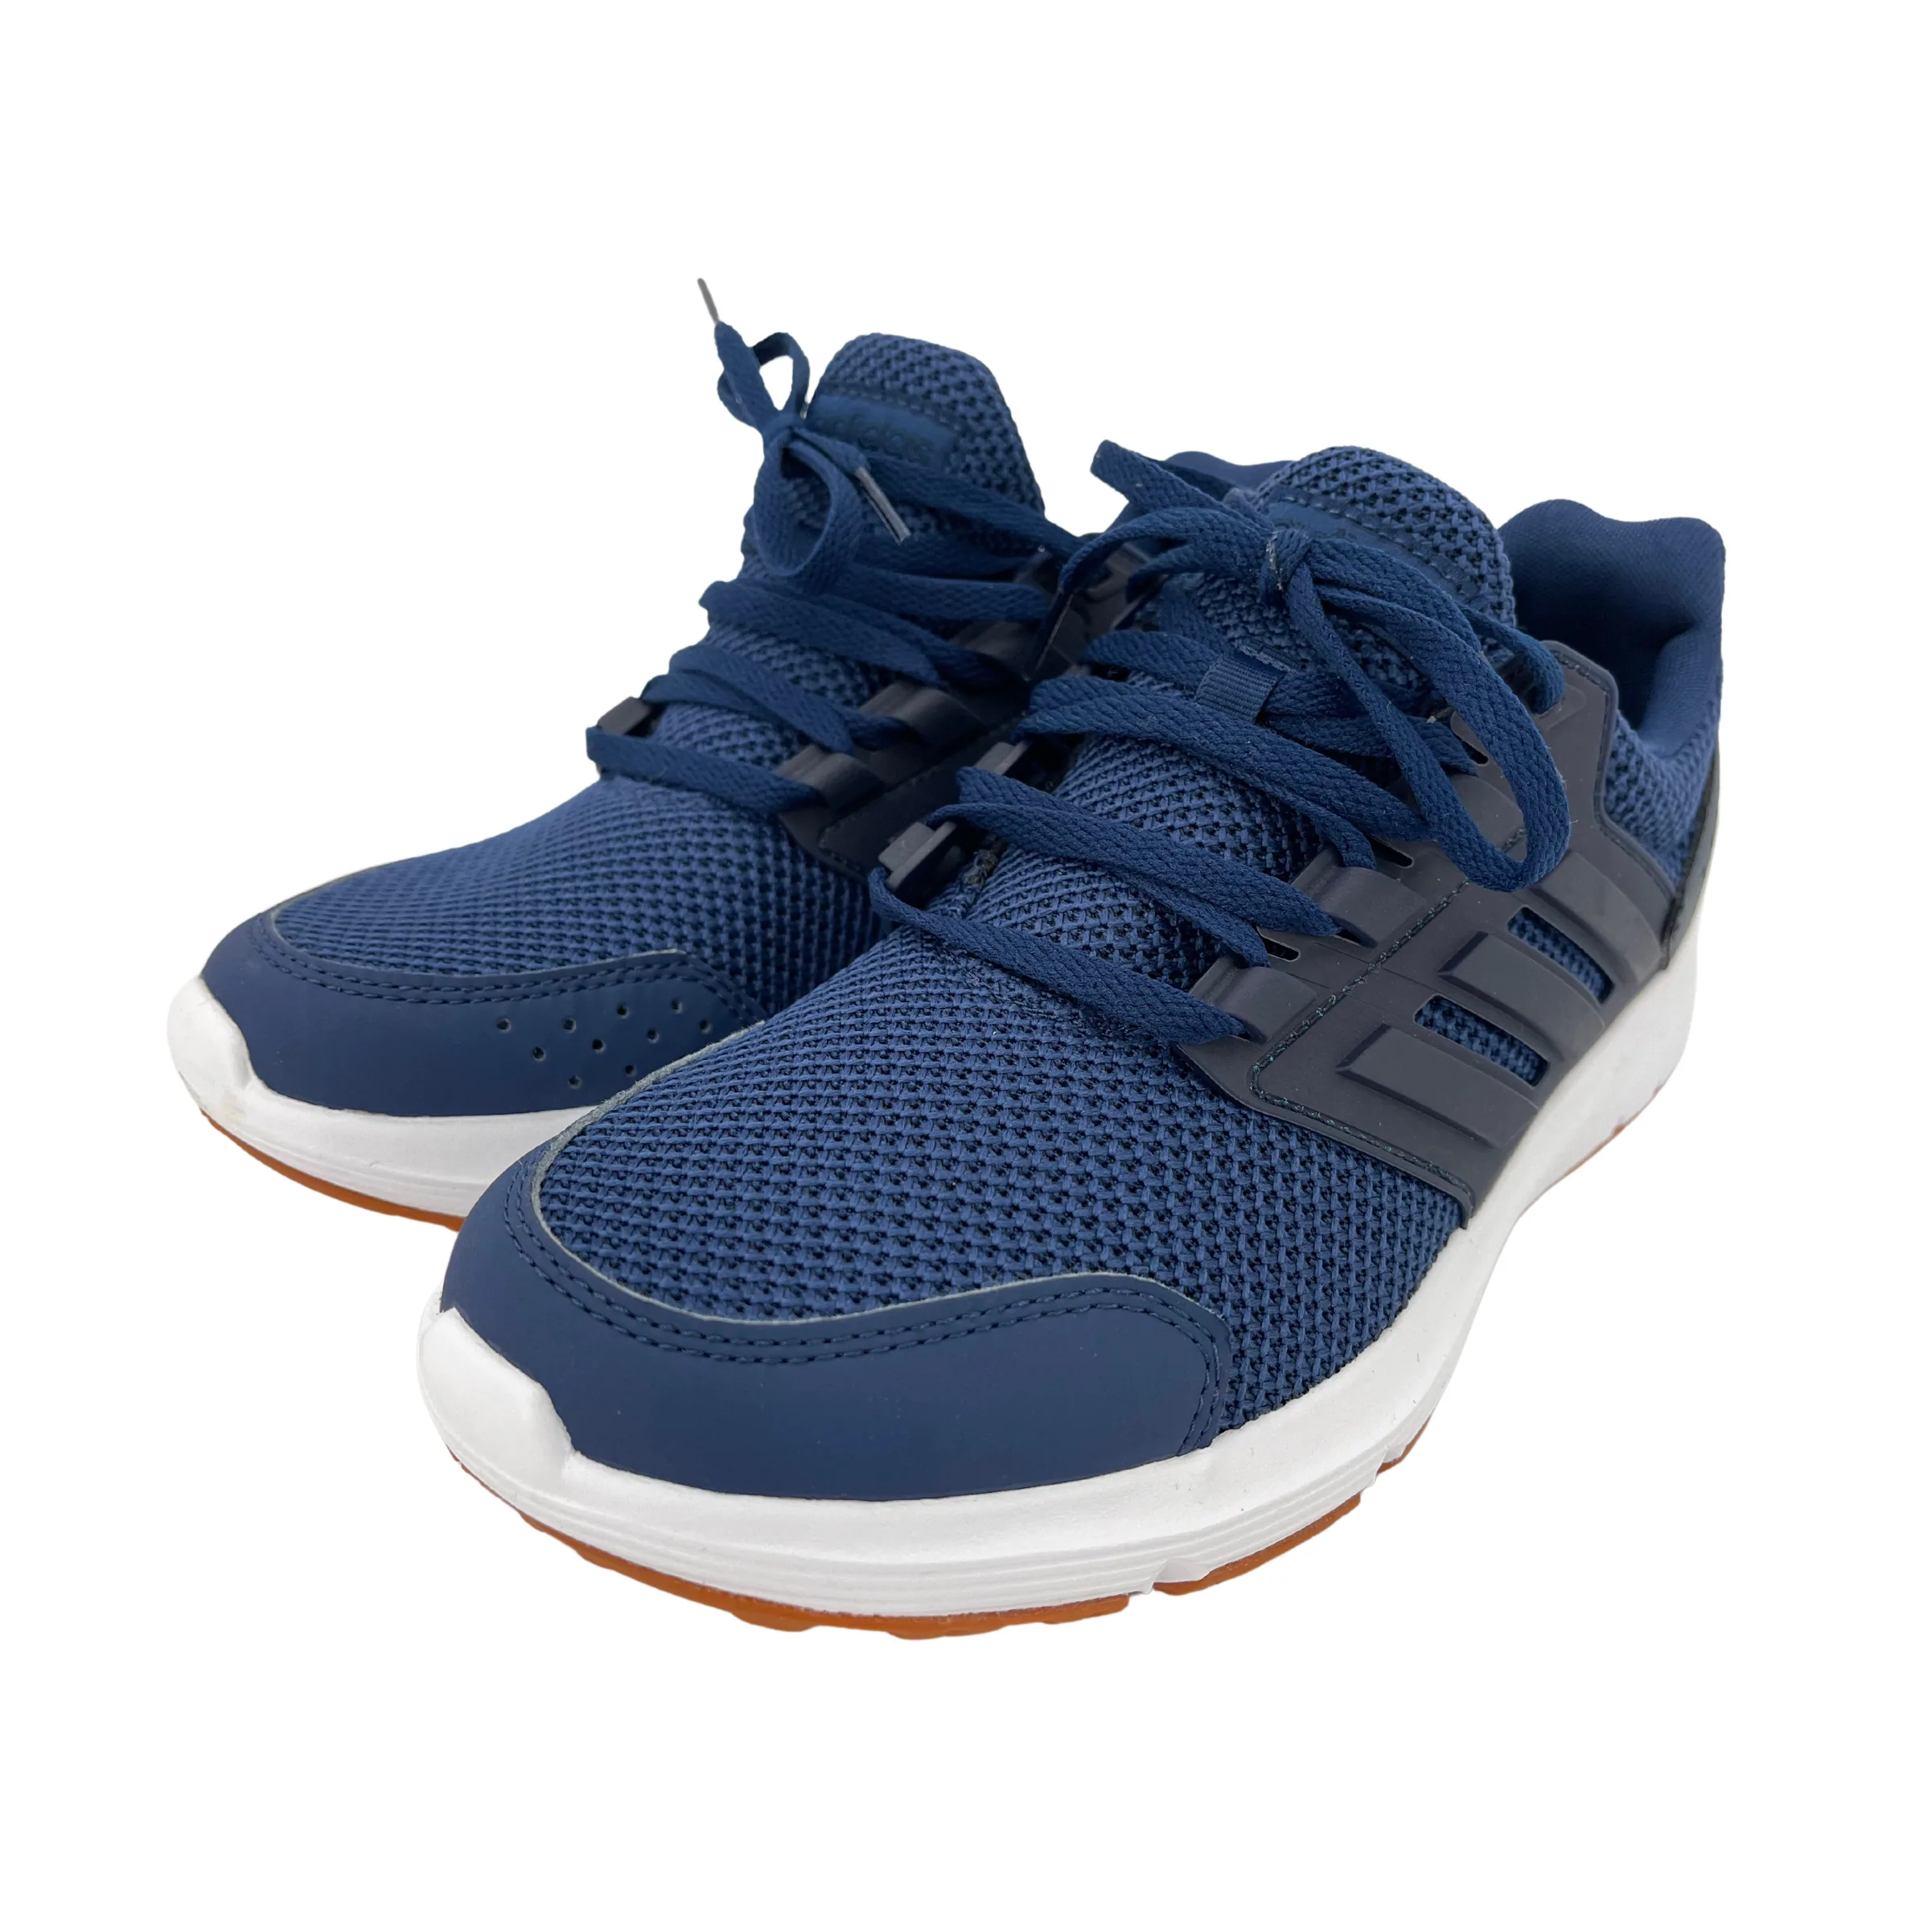 Adidas Men's Running Shoes / Galaxy 4 / Navy / Size 7 **No Tags**